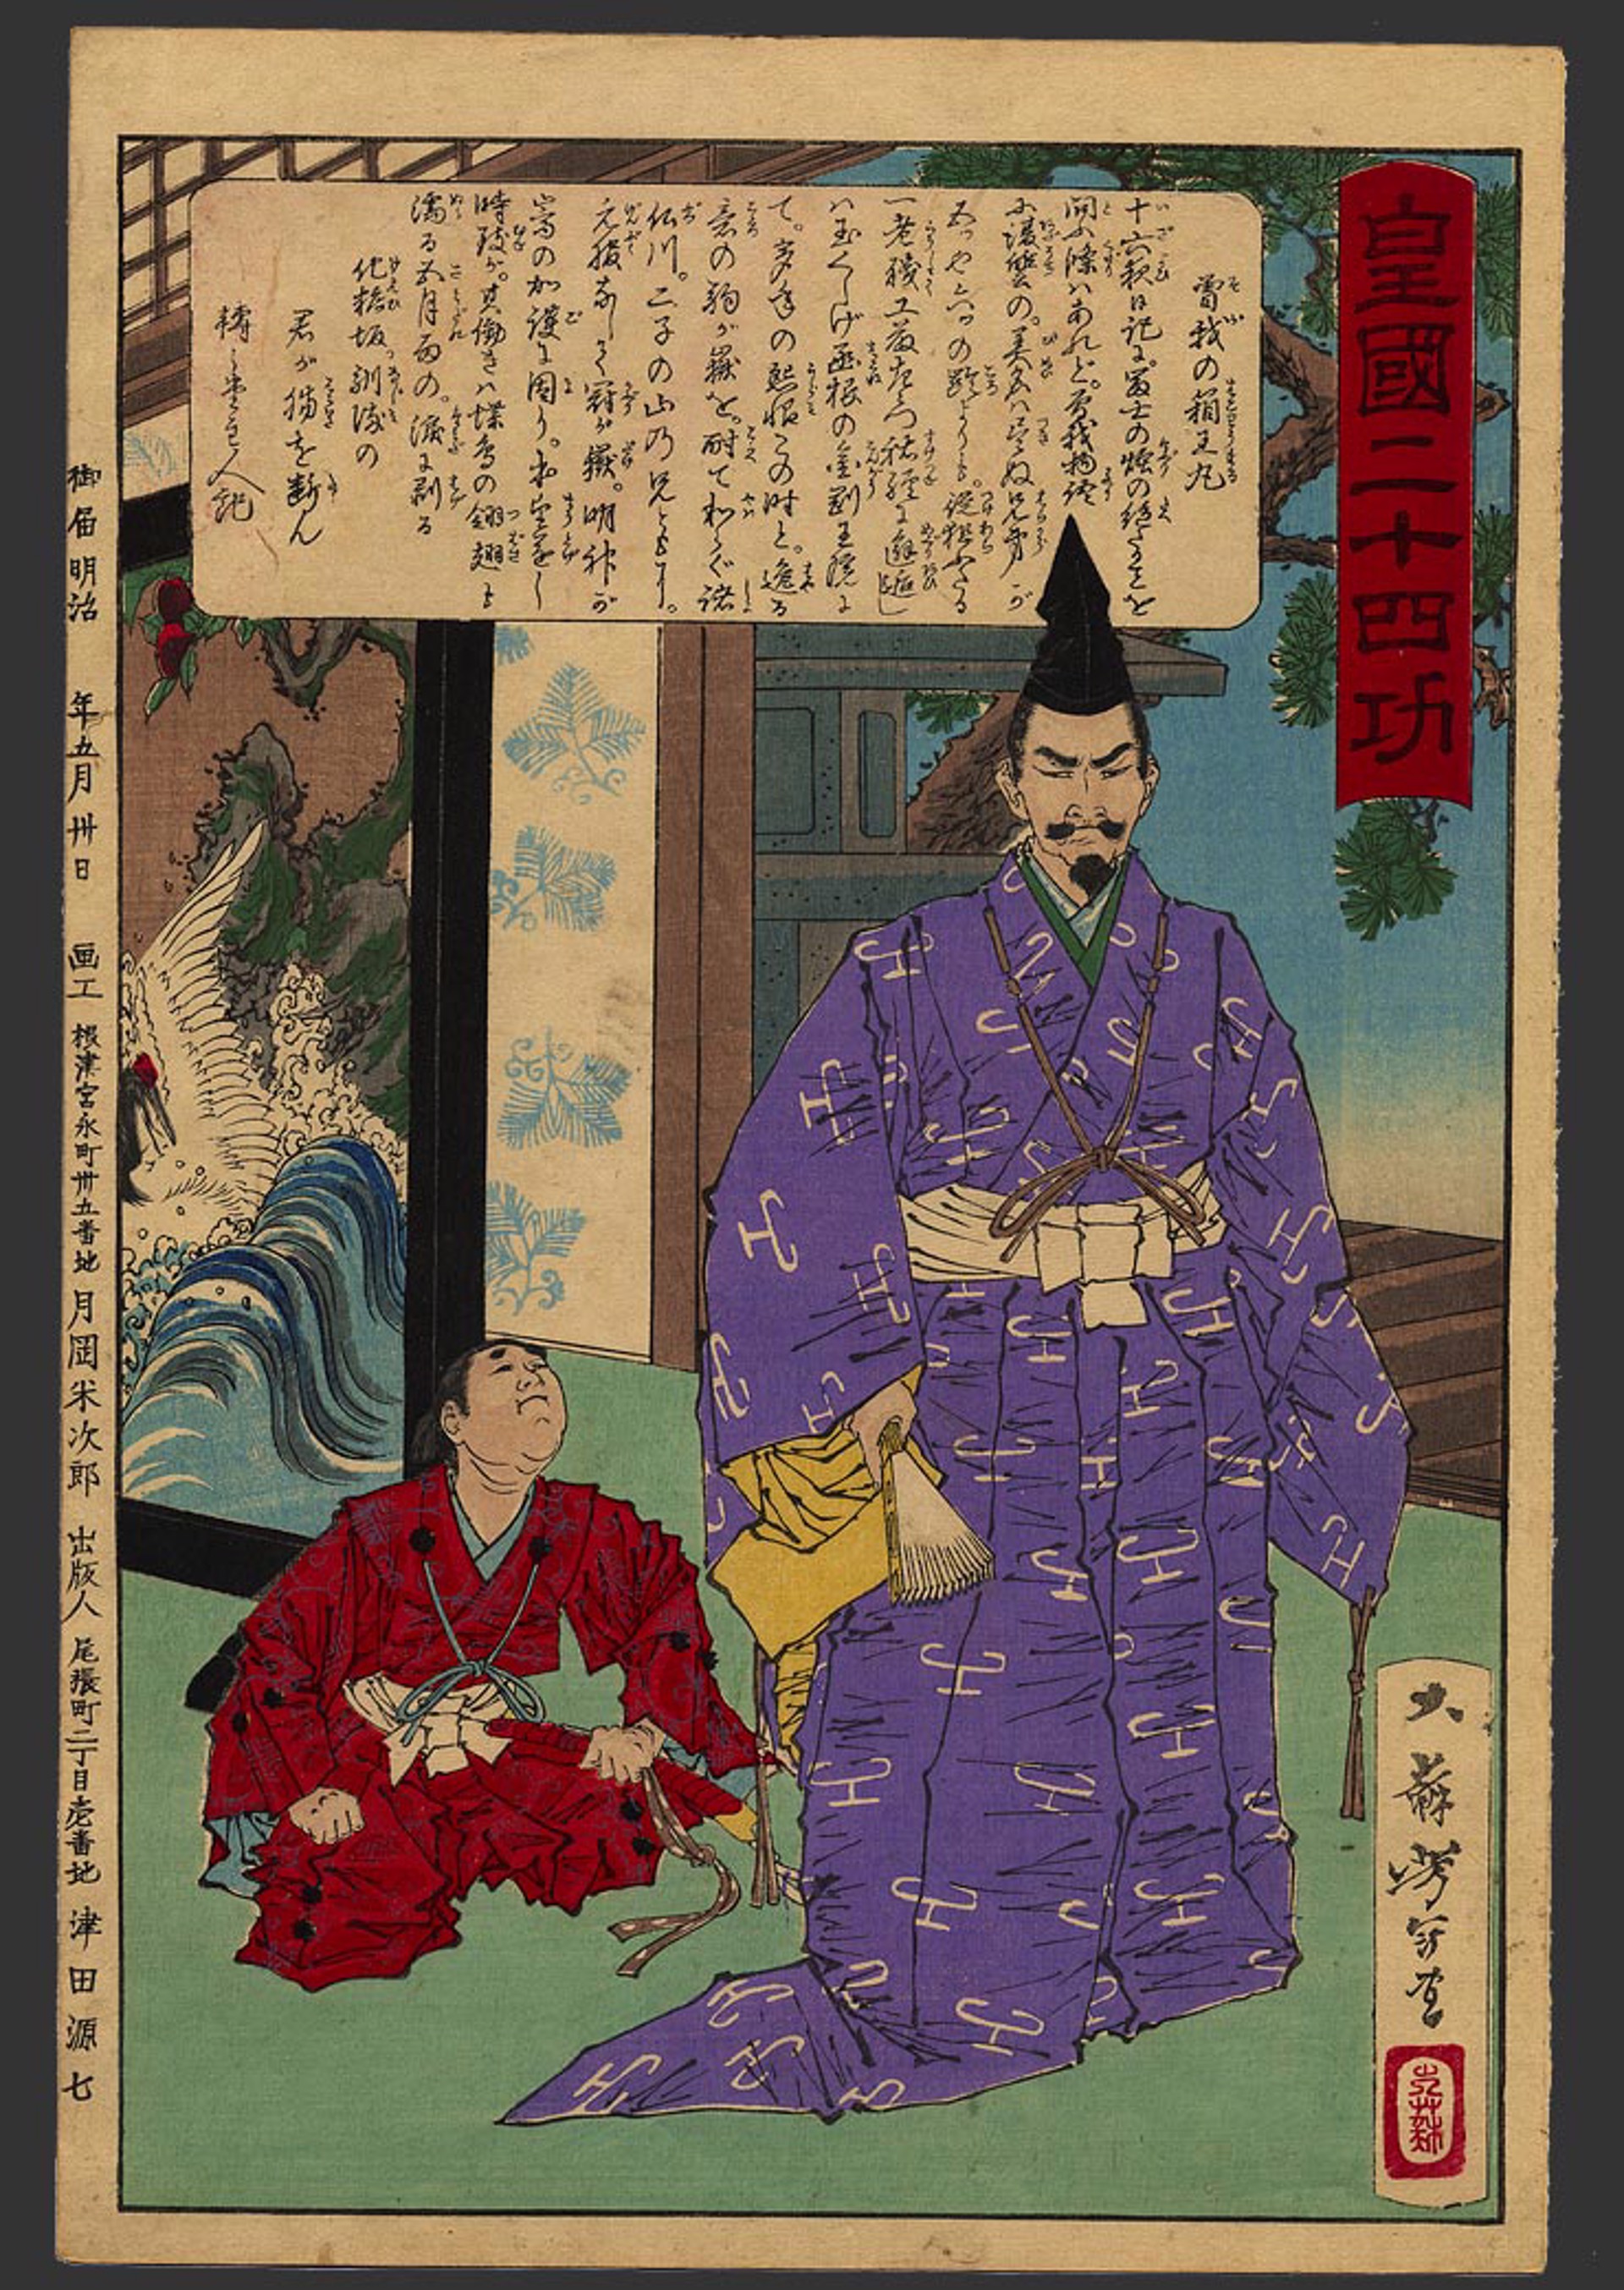 #4 Soga no Hakoomaru (Goro Tokimune 1174-93) 24 Accomplishments in Imperial Japan by Yoshitoshi